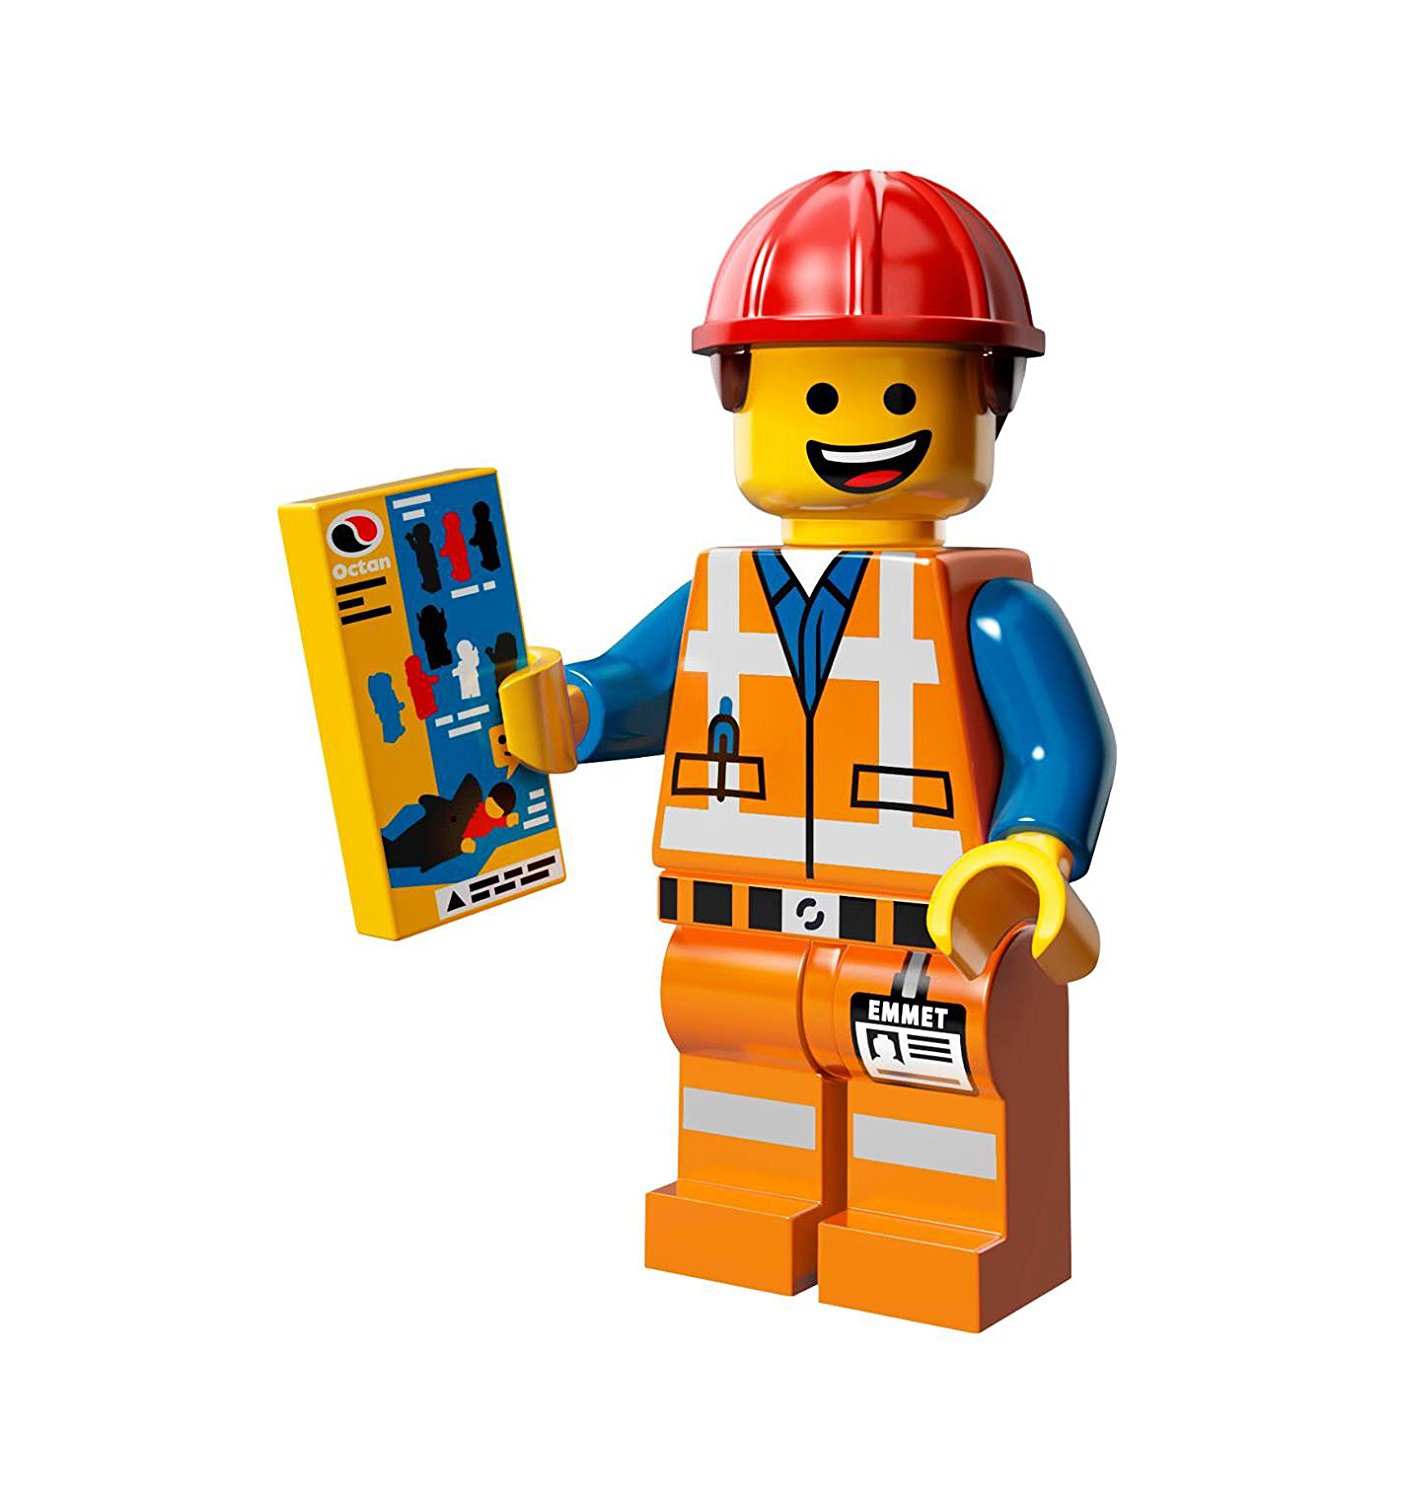 Amazon.com: The Lego Movie Emmet Construction Worker Minifigure ...